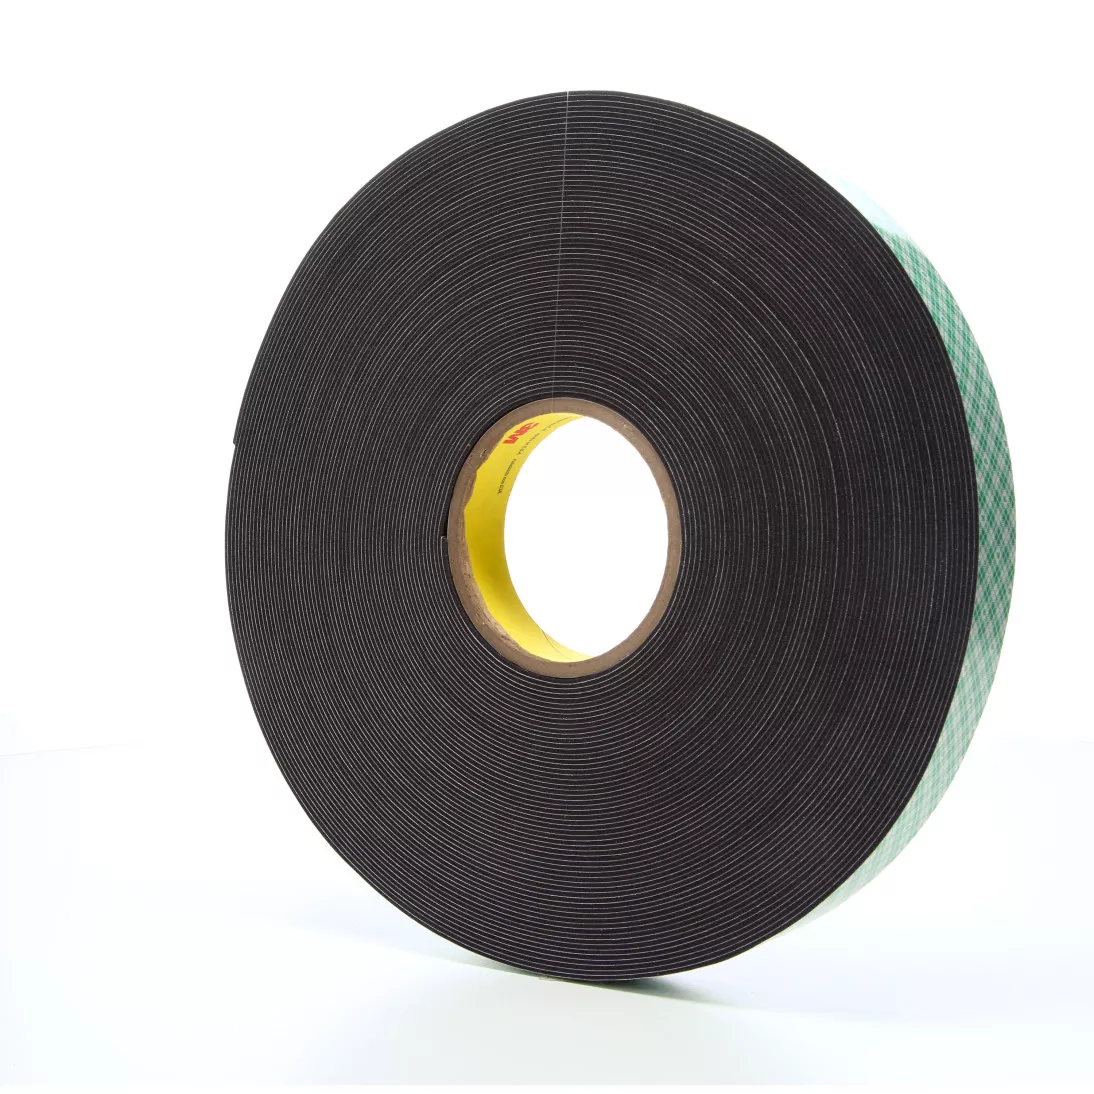 3M™ Double Coated Urethane Foam Tape 4056, Black, 1 in x 36 yd, 62 mil,
9 rolls per case